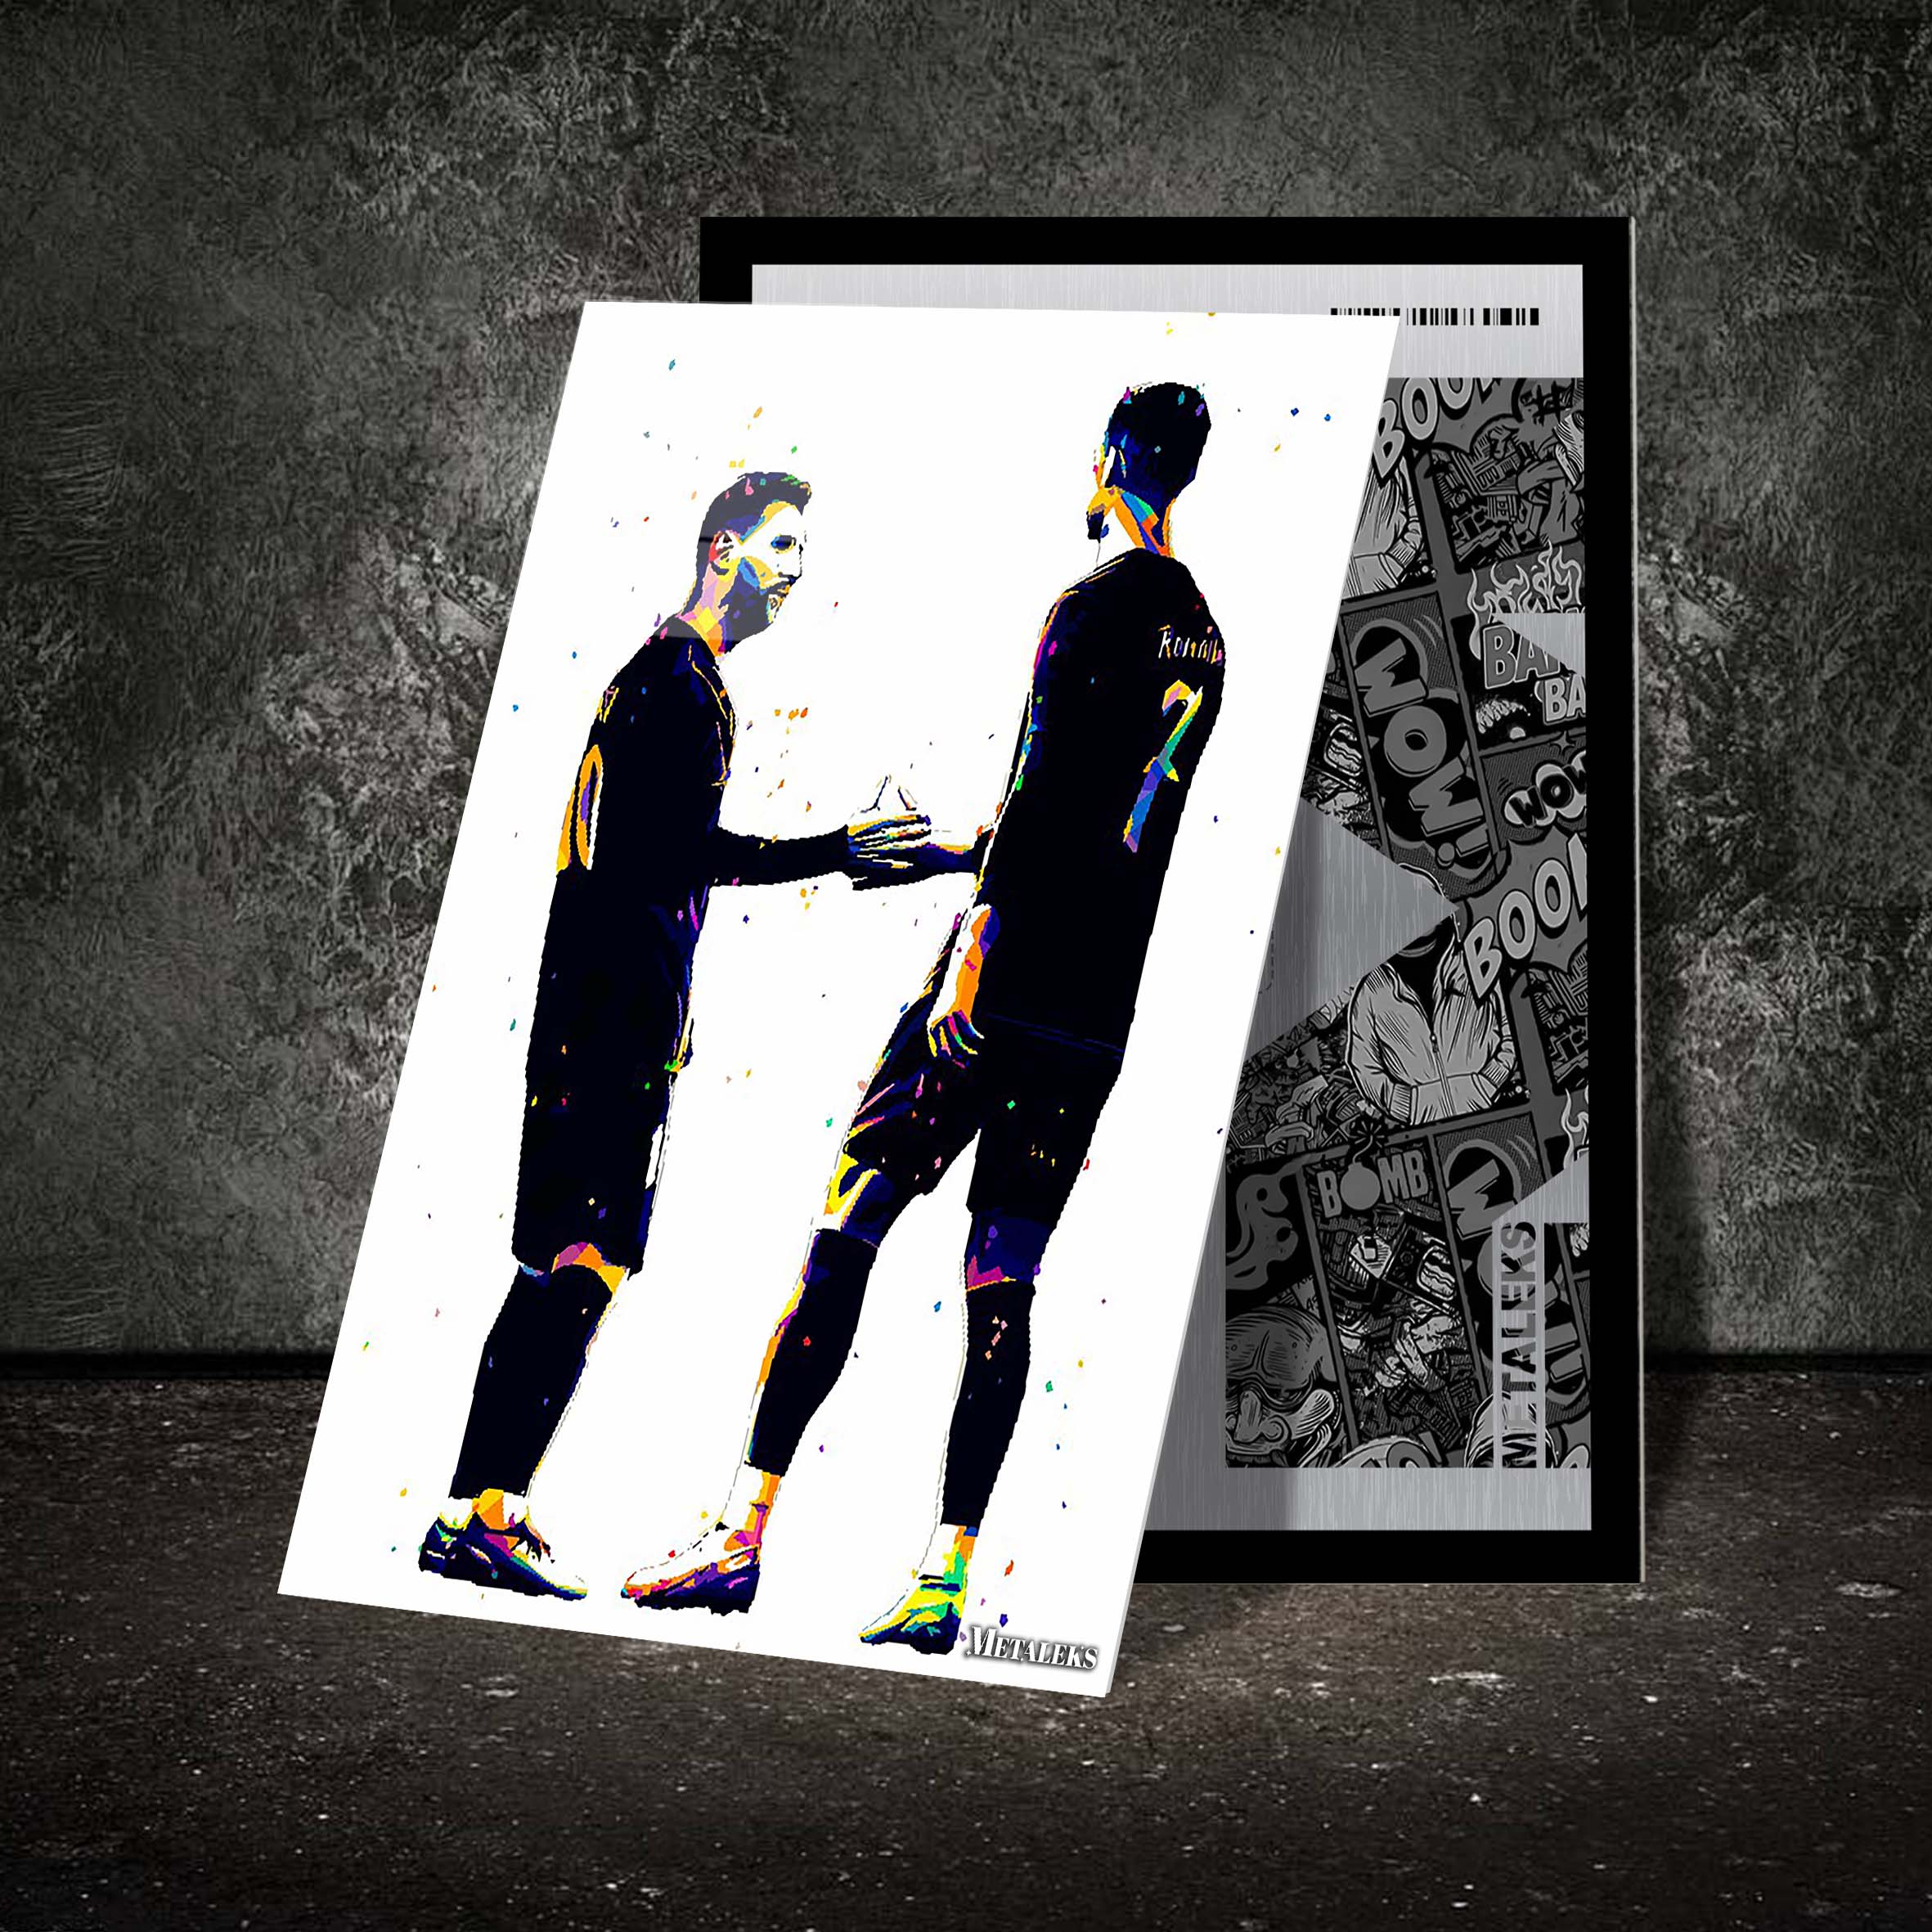 Ronaldo and Lionel Messi-designed by @Nadhifsaoqi